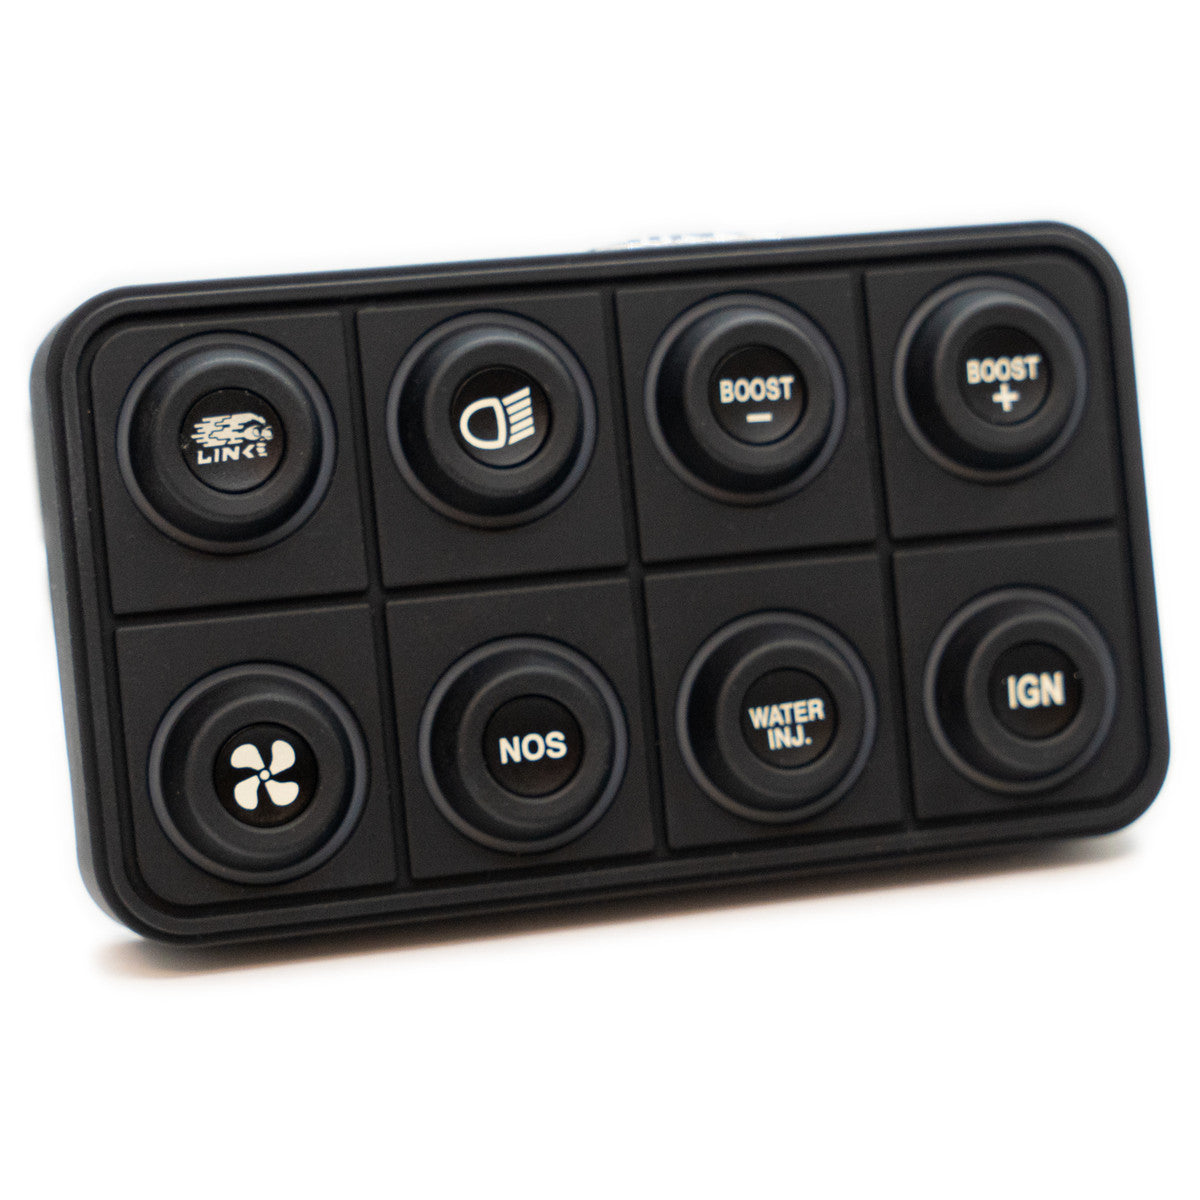 Link ECU CAN Keypad 8 button